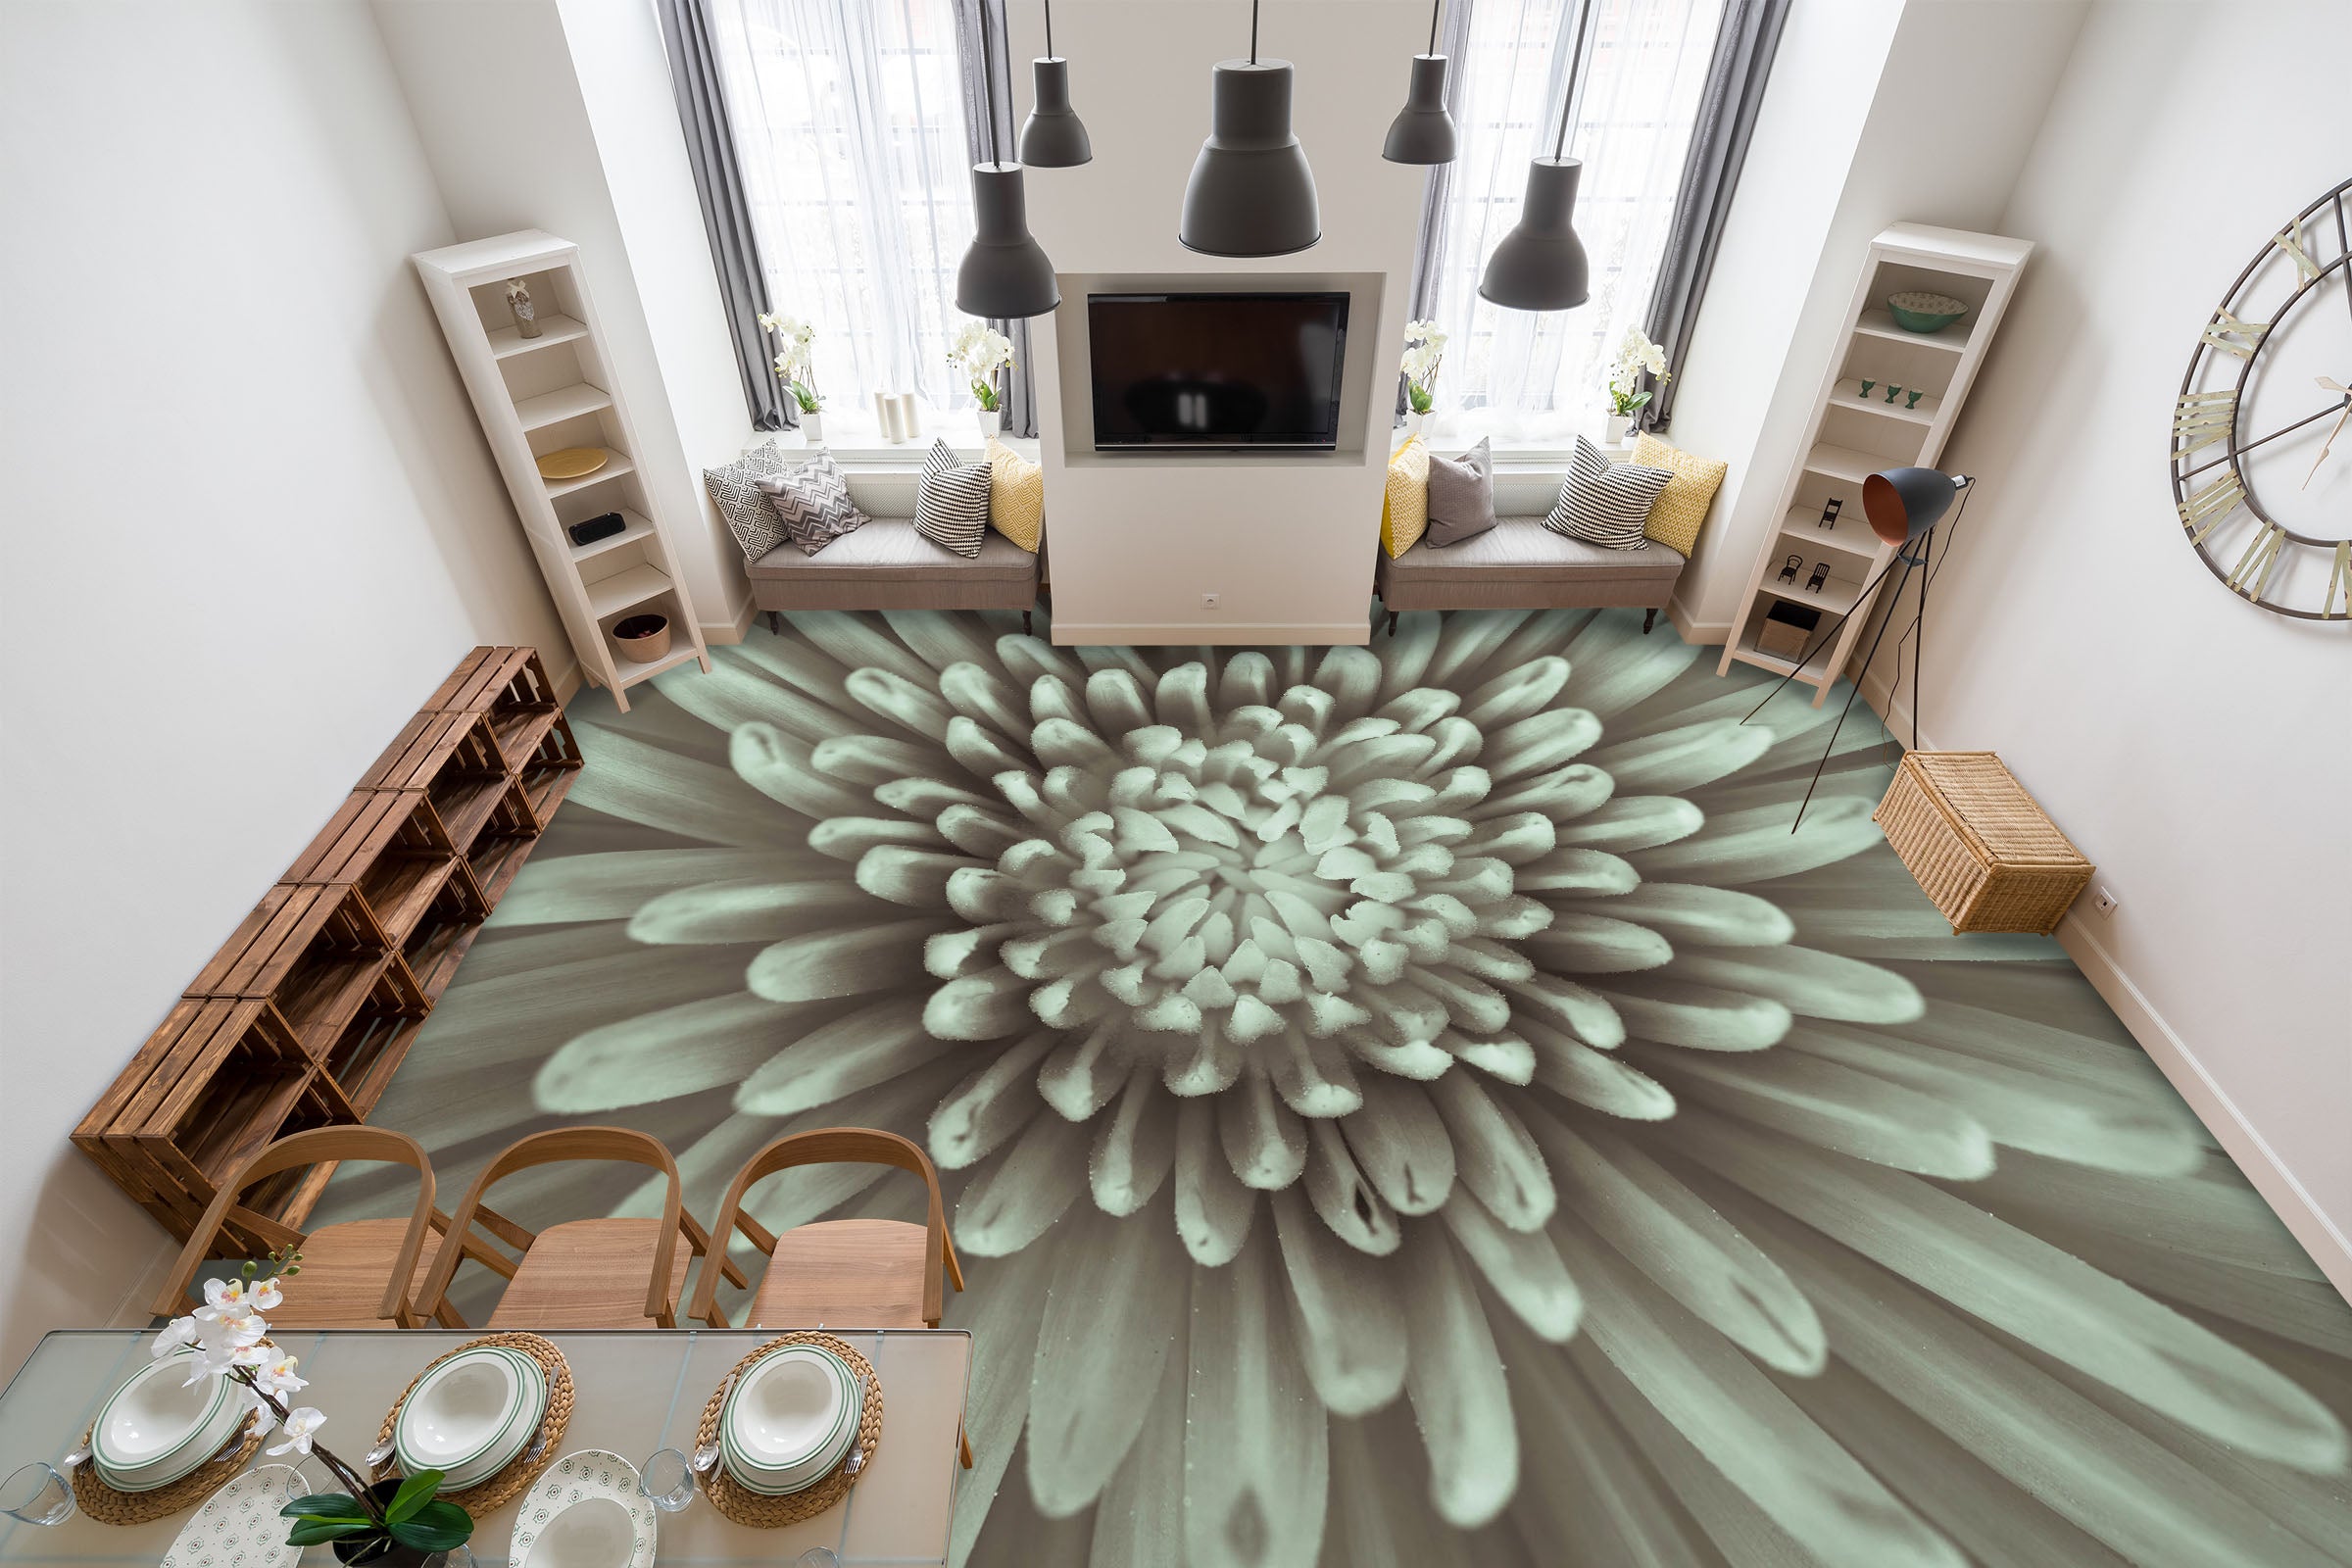 3D Chrysanthemum 98171 Adrian Chesterman Floor Mural  Wallpaper Murals Self-Adhesive Removable Print Epoxy